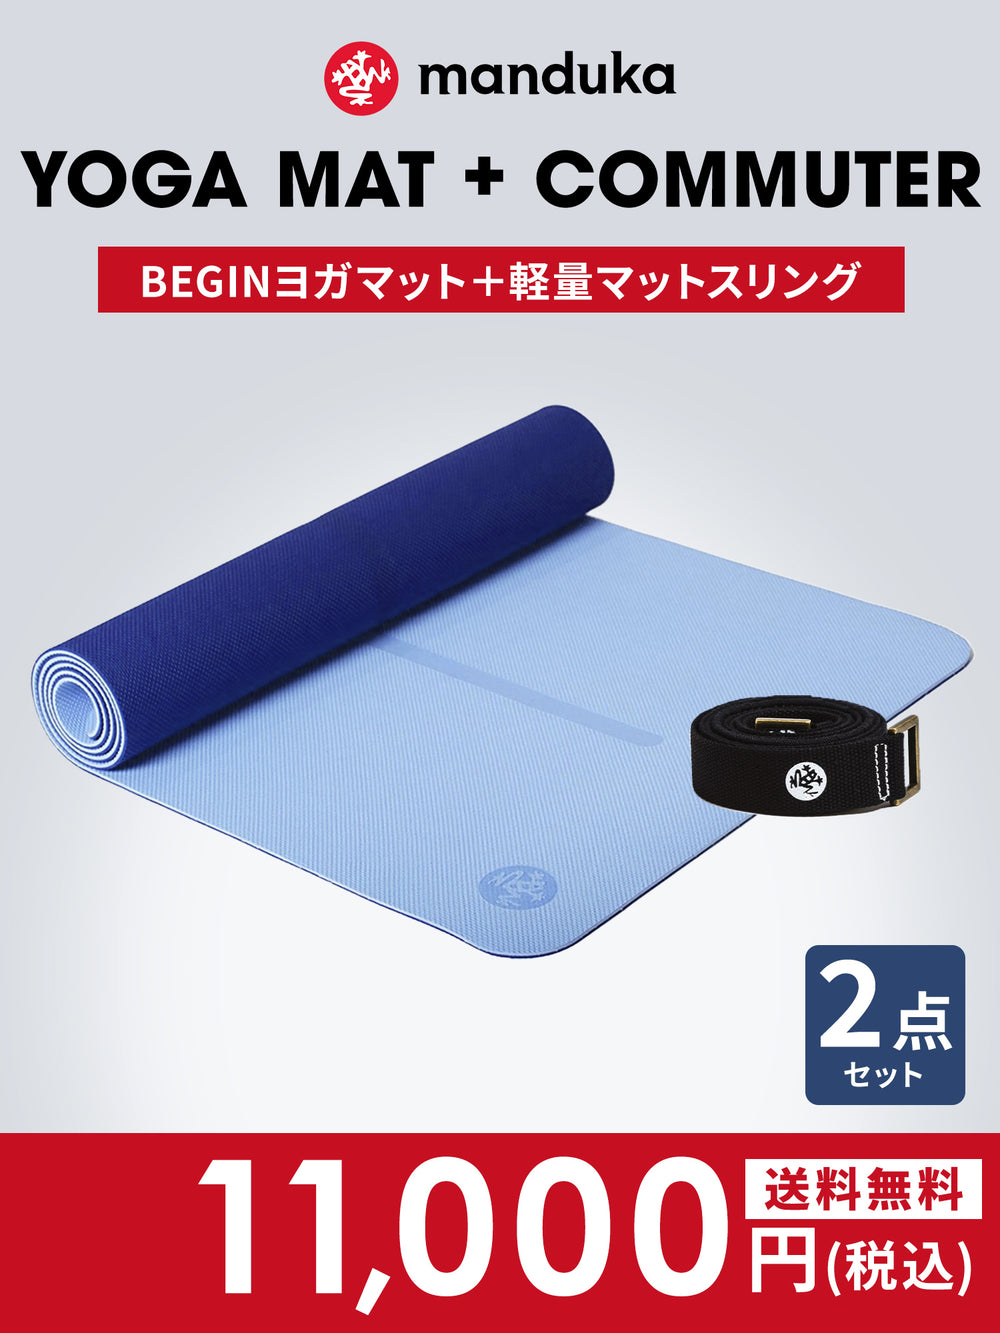 Manduka] [Yoga starter 2-piece set] / Begin Begin yoga mat (5mm